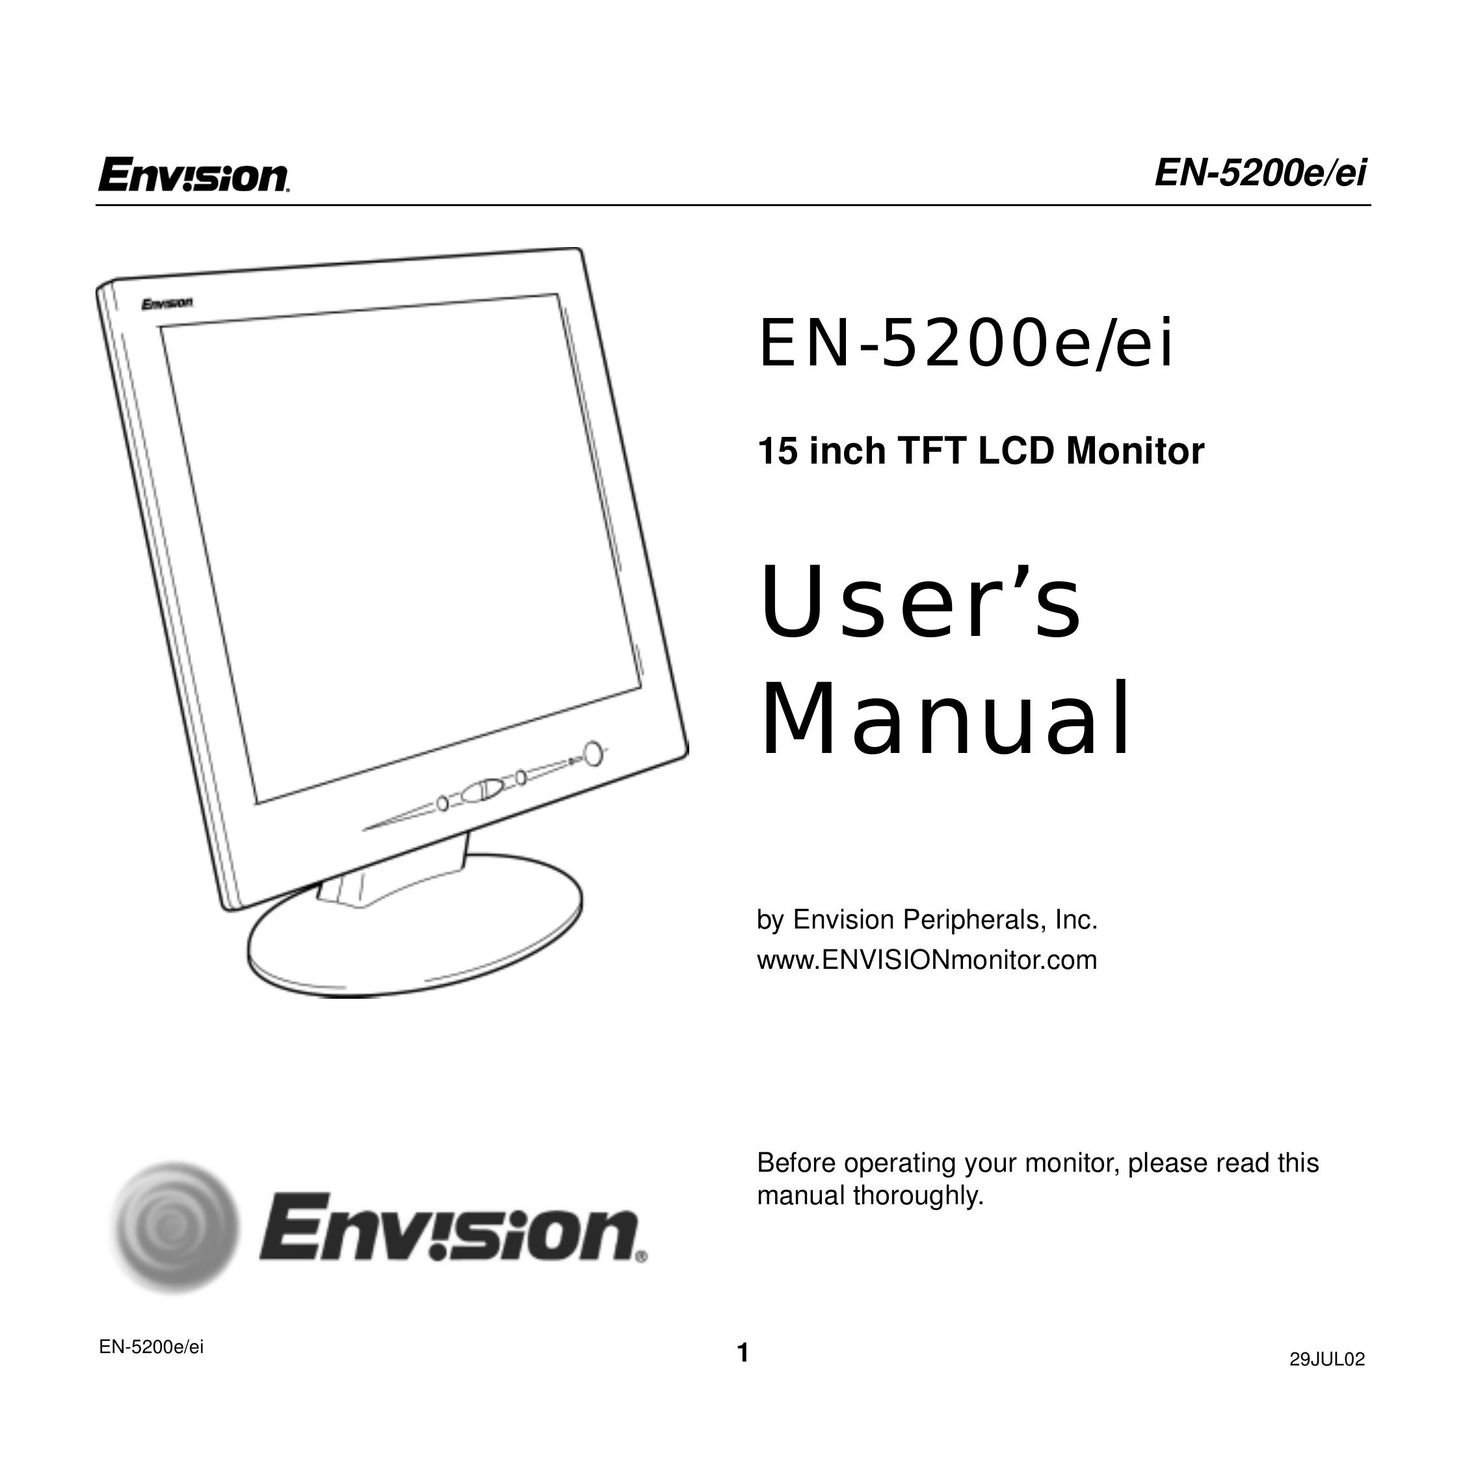 Envision Peripherals EN-5200e/ei Computer Monitor User Manual